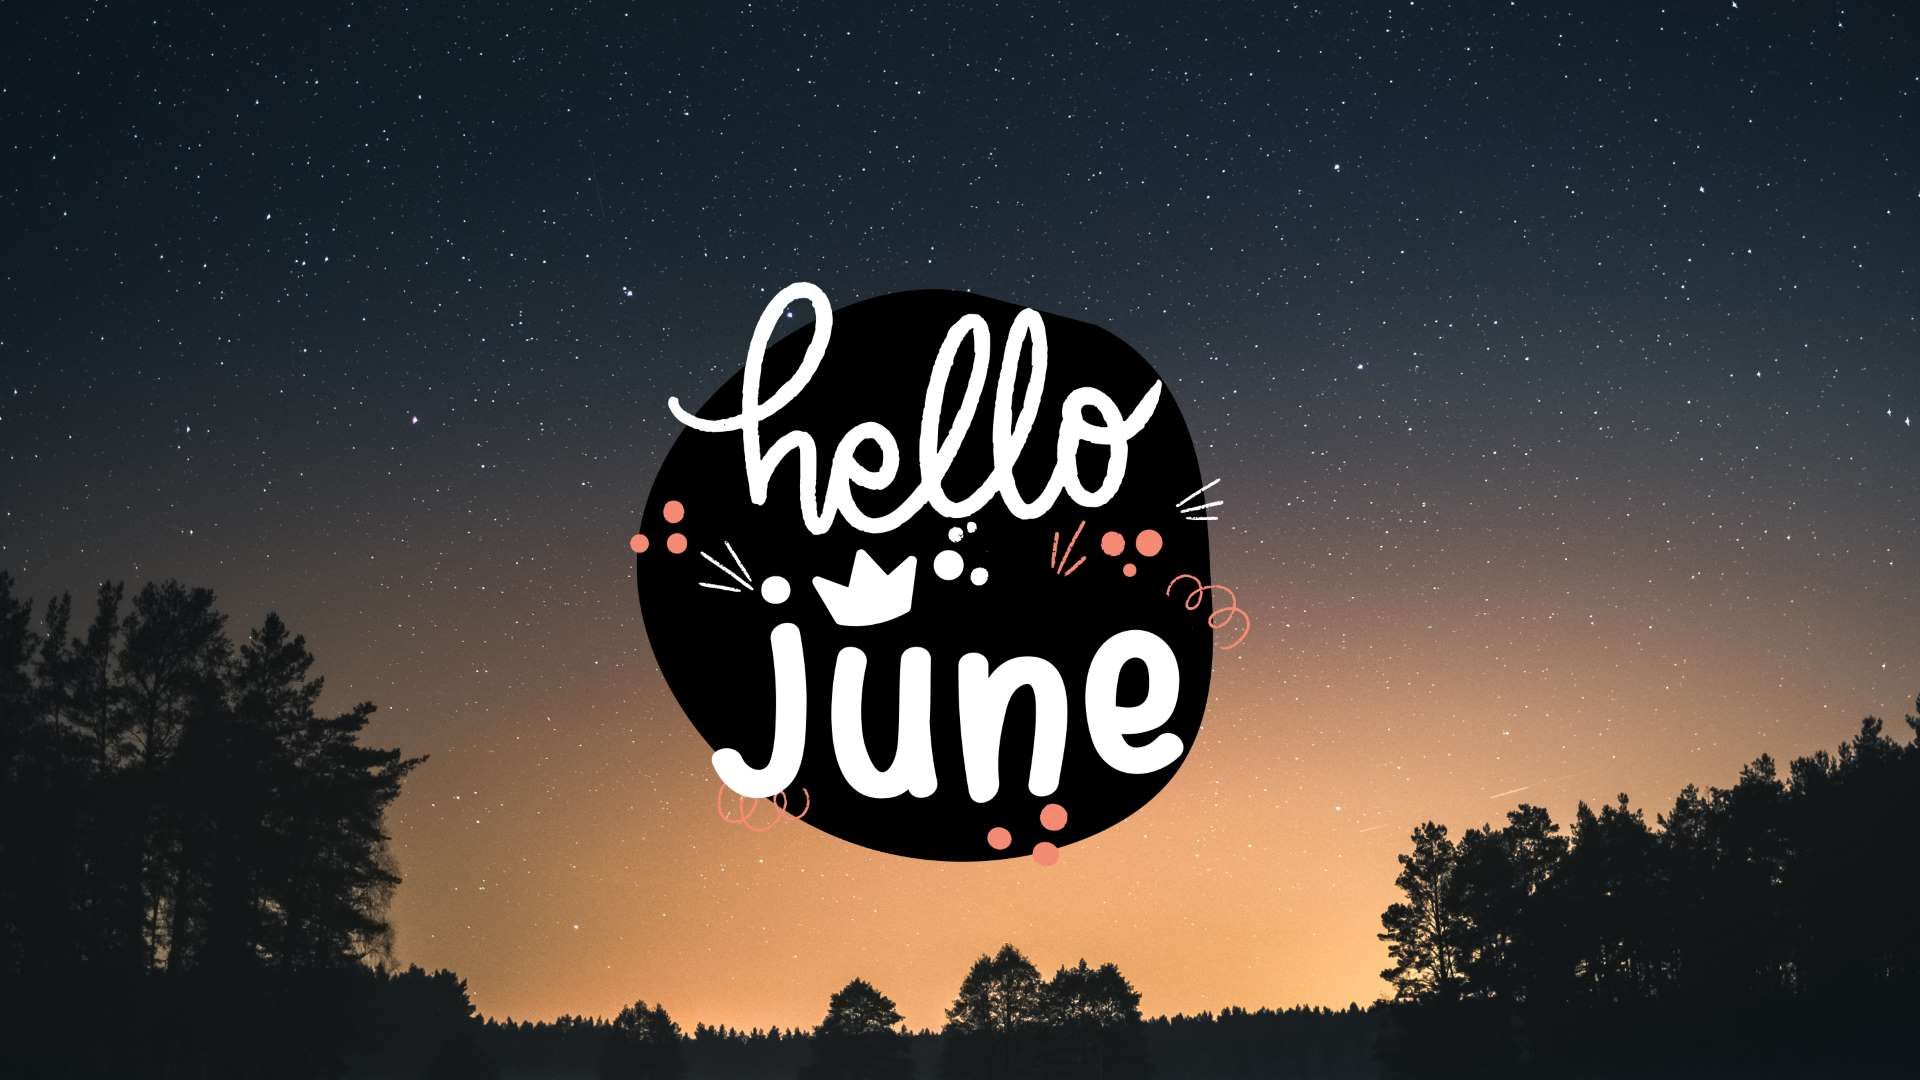 Hello June Beautiful Wallpaper & Ideas For June Vibes